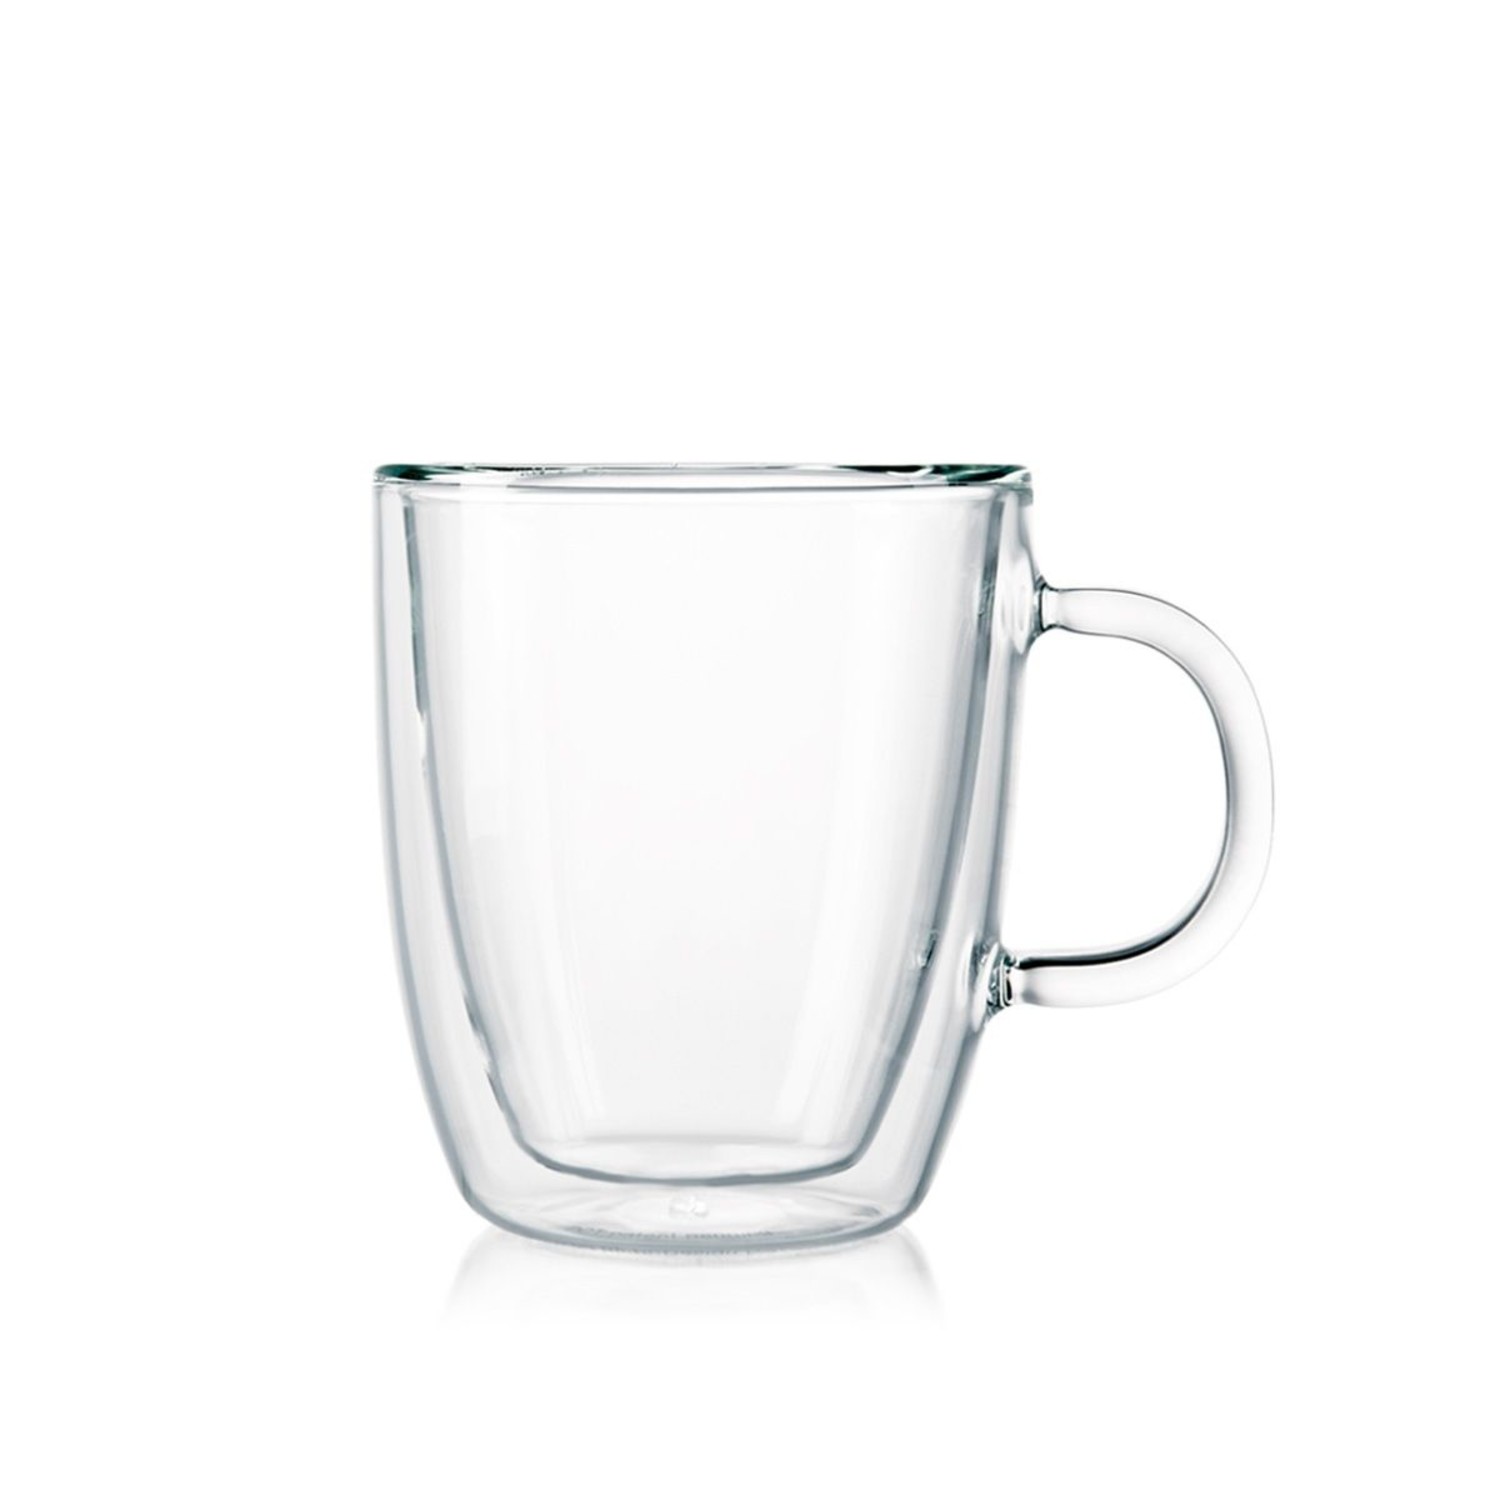 Bodum Starbucks Mermaid double wall glasses mug cup w/ handle